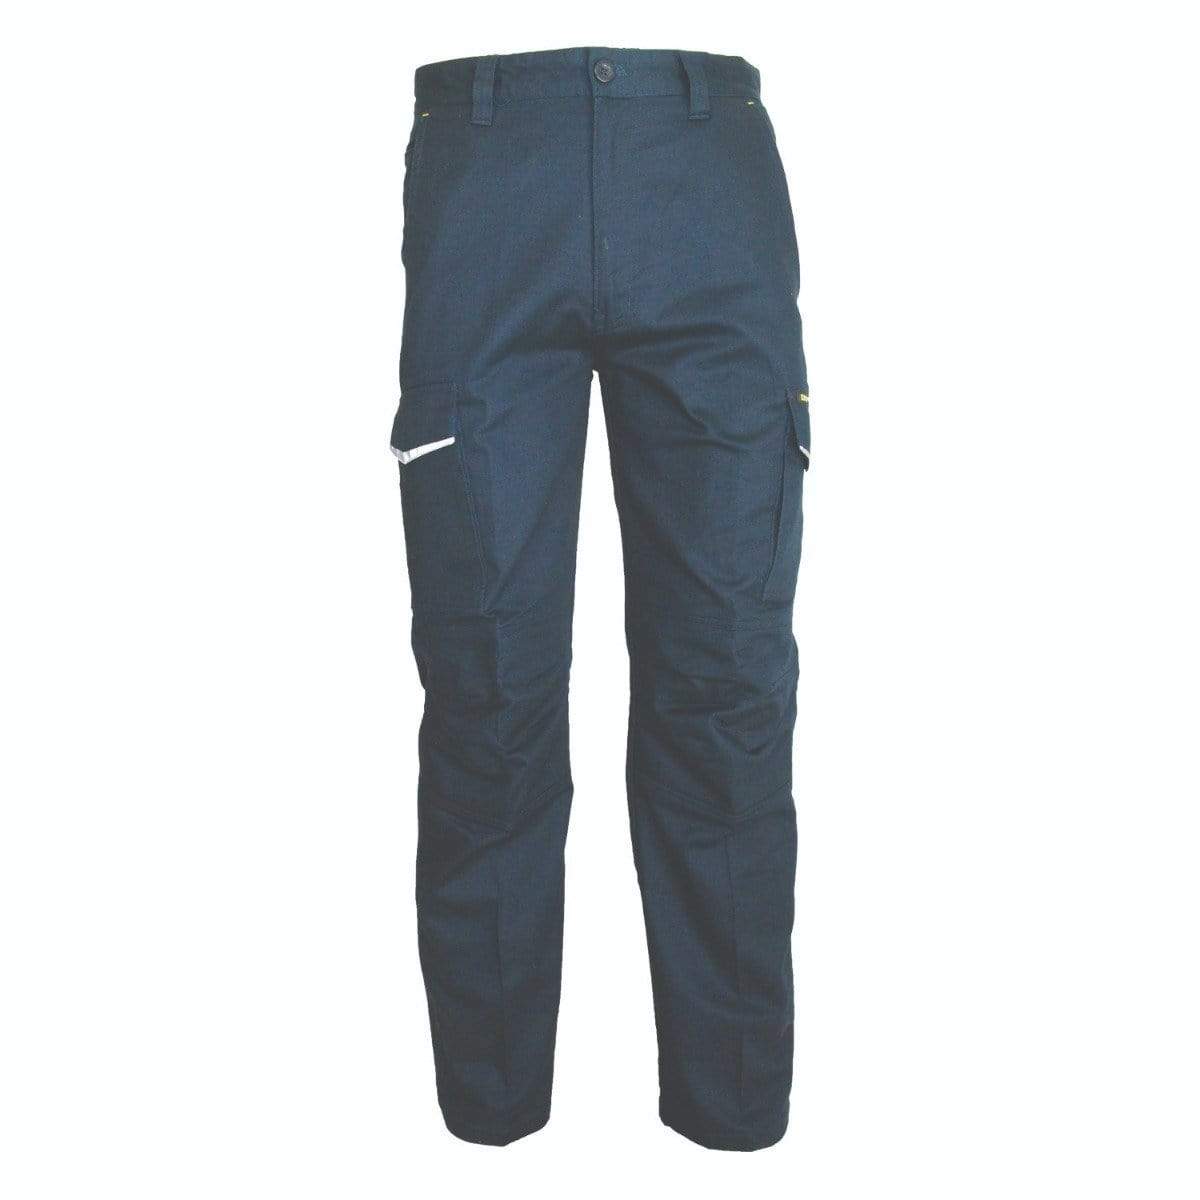 Dnc Workwear Ripstop Cargo Pants - 3382 Work Wear DNC Workwear Navy 77R 